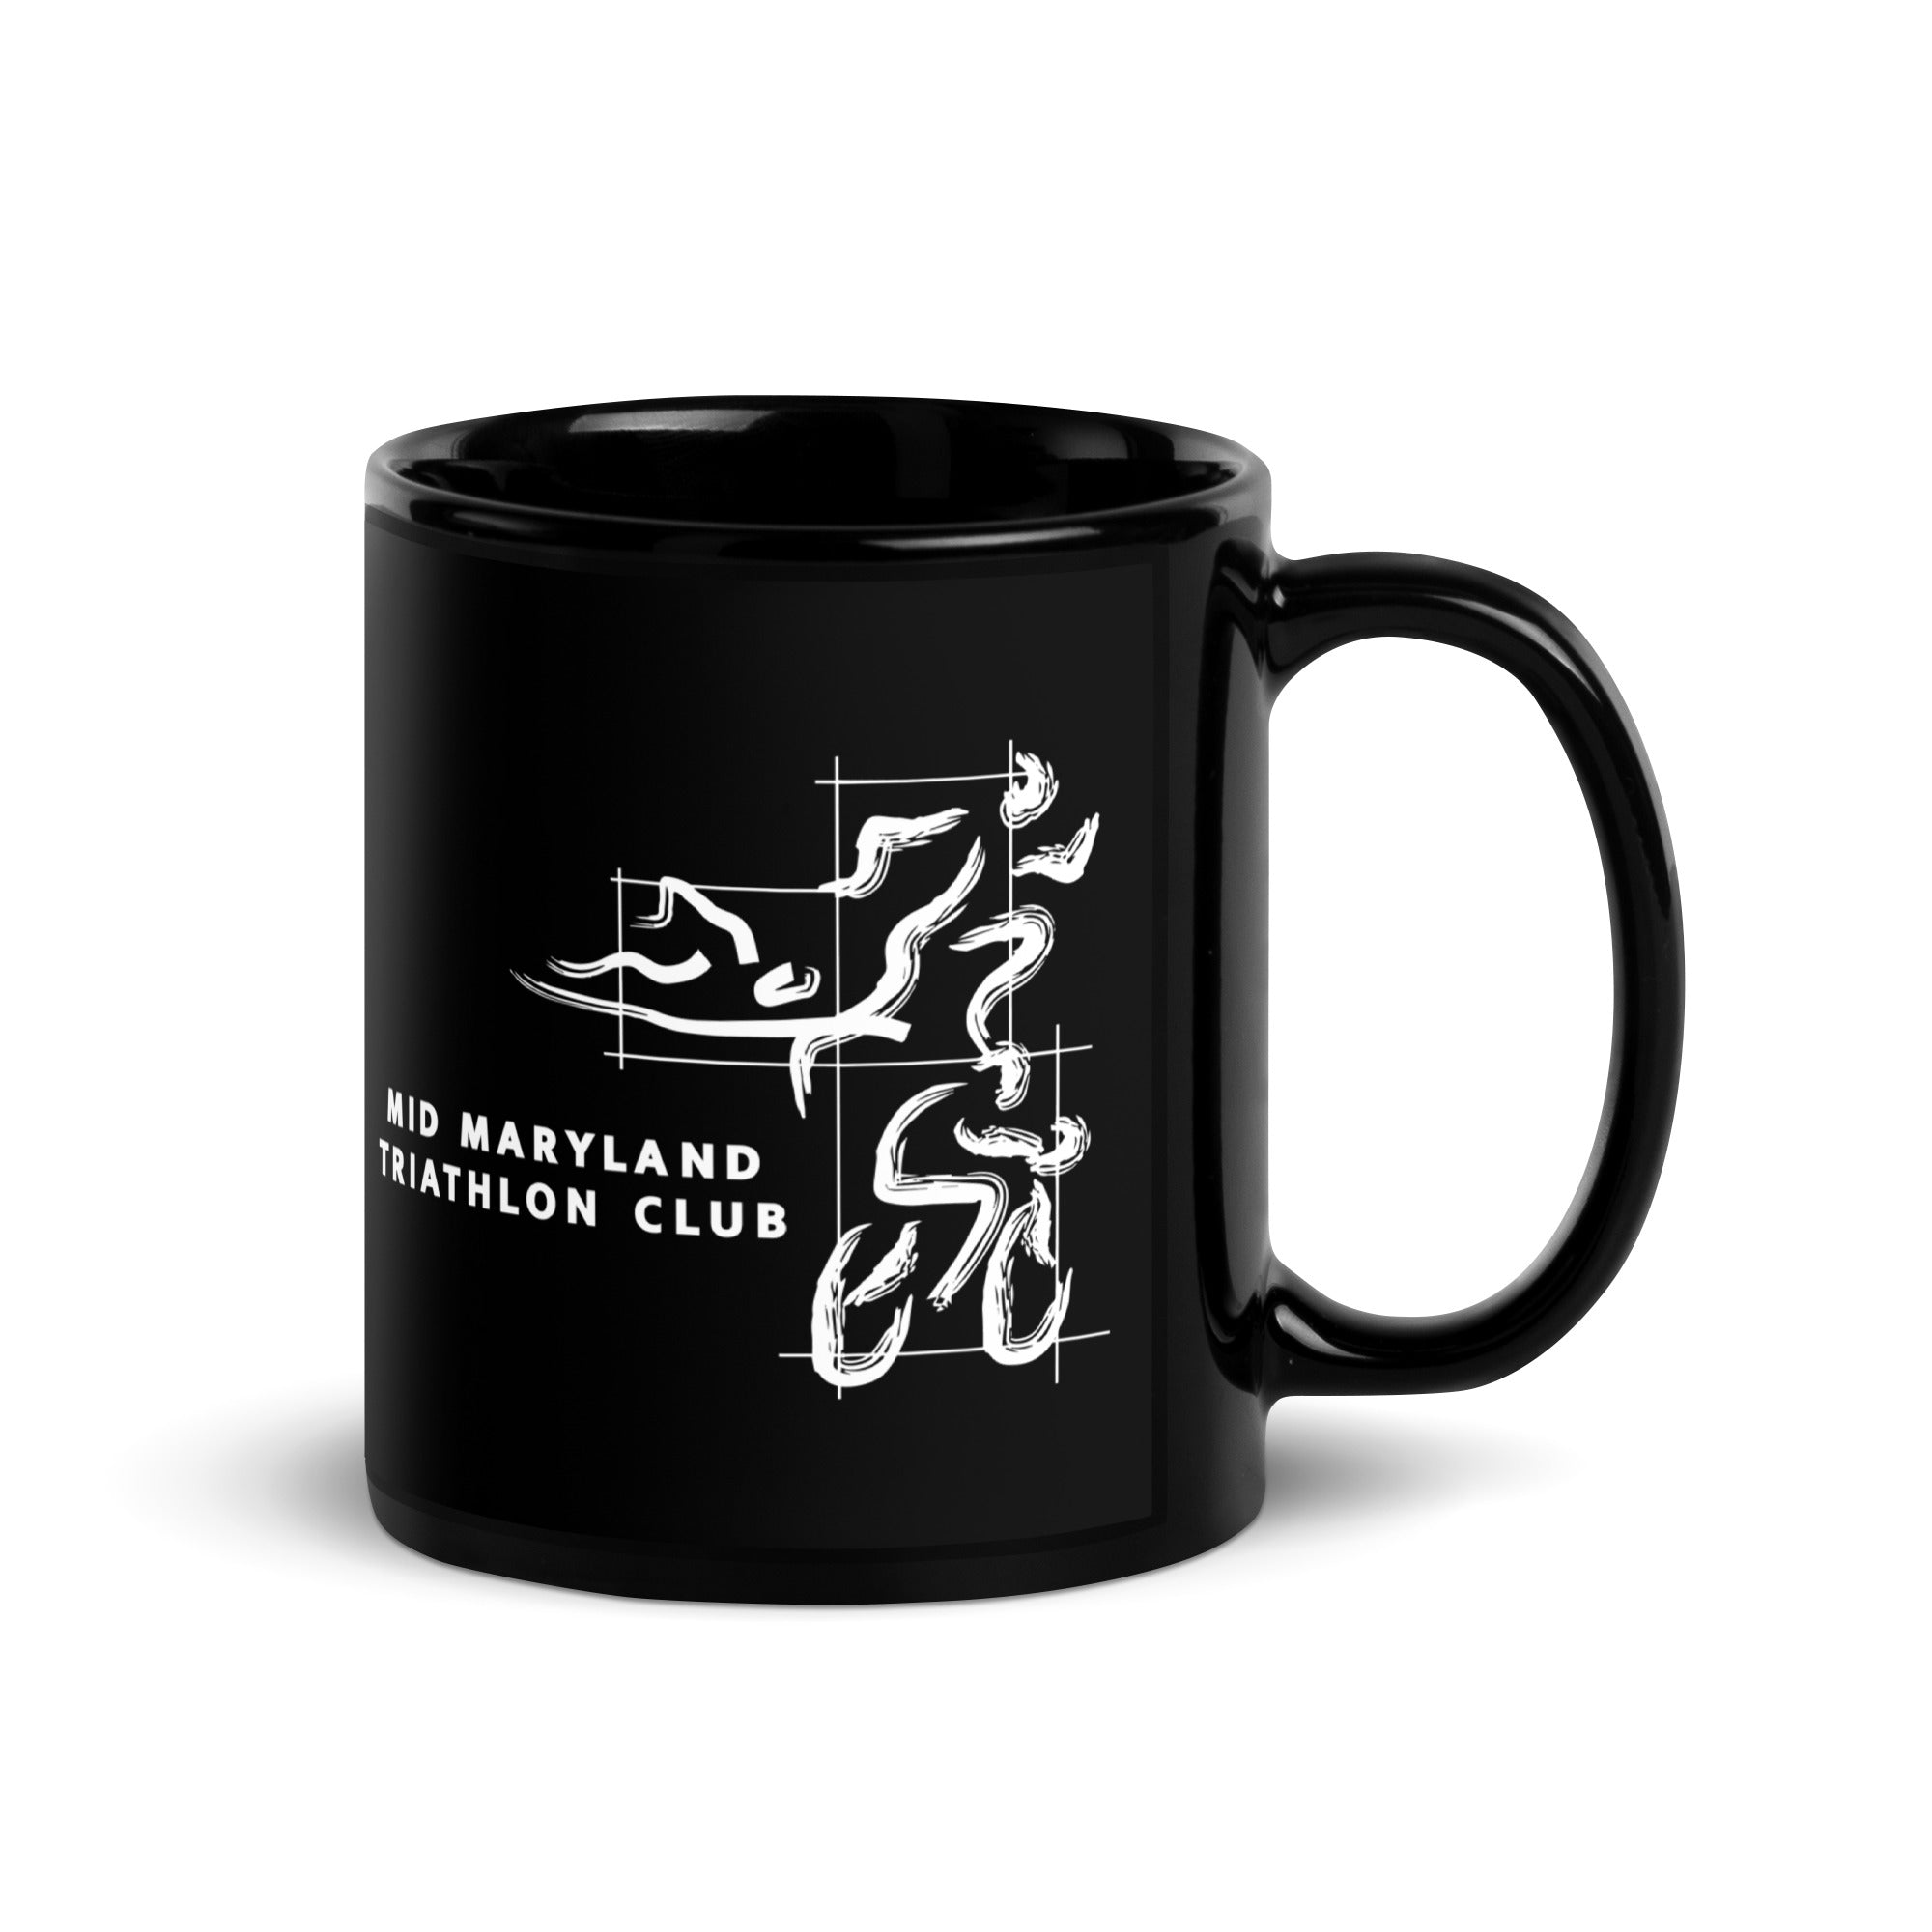 MID MARYLAND TRI CLUB Black Glossy Mug